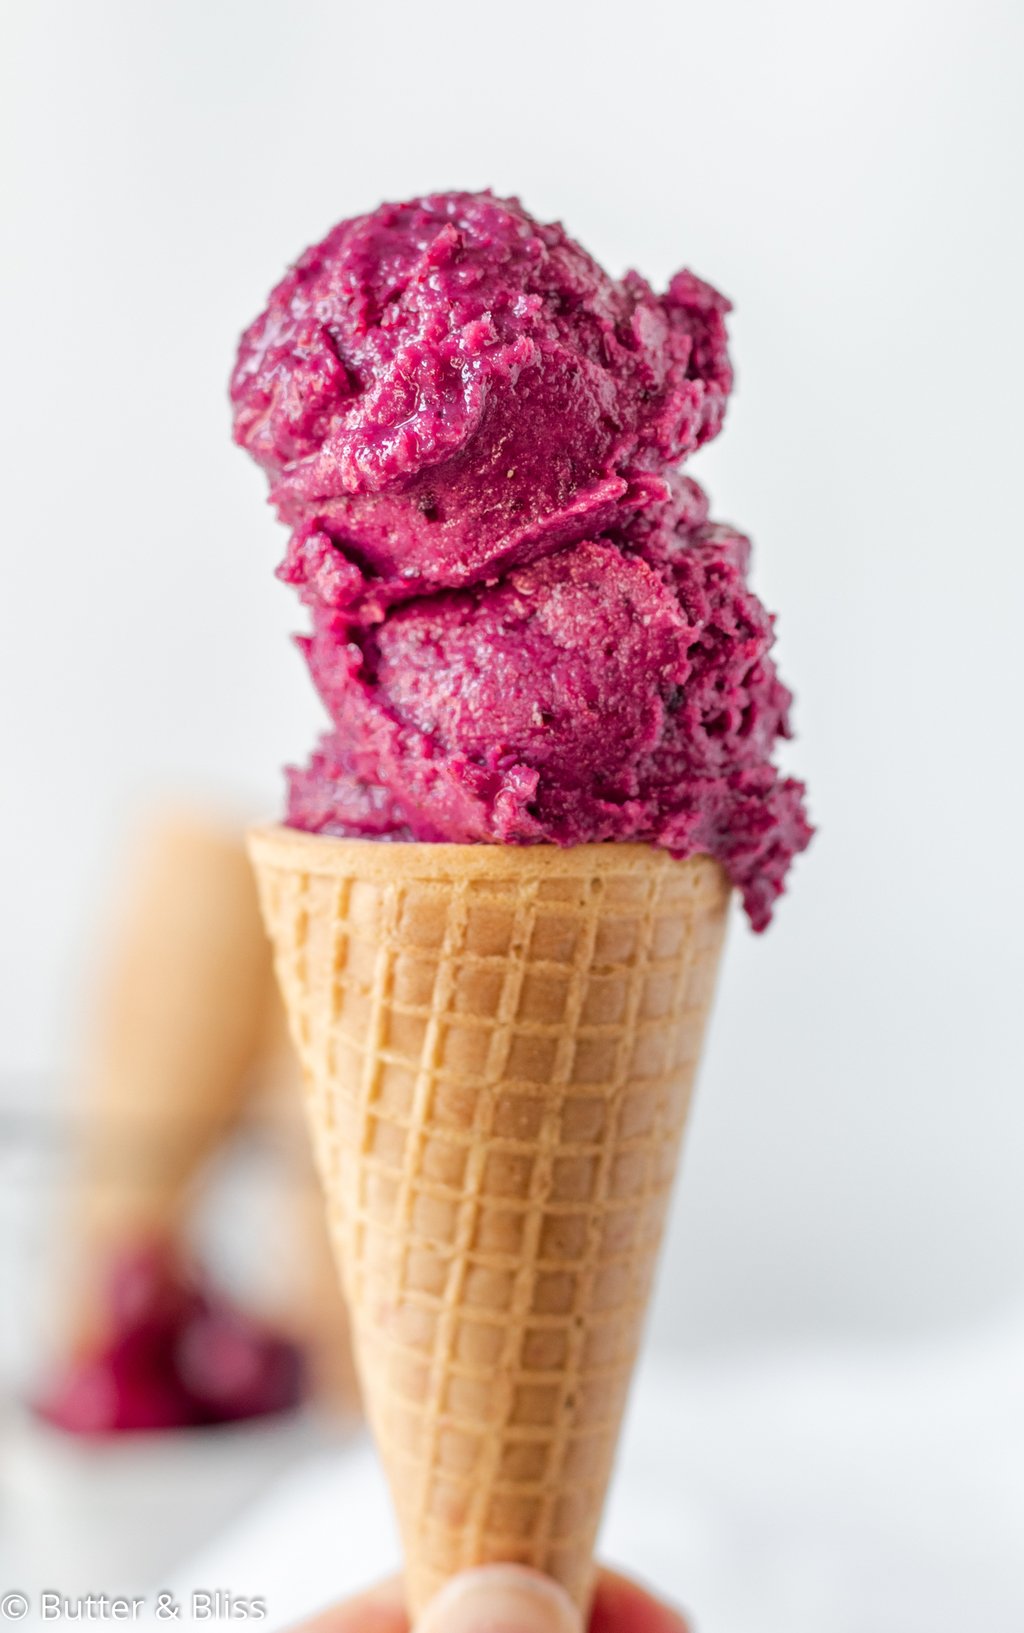 Cherry ice cream on a cone